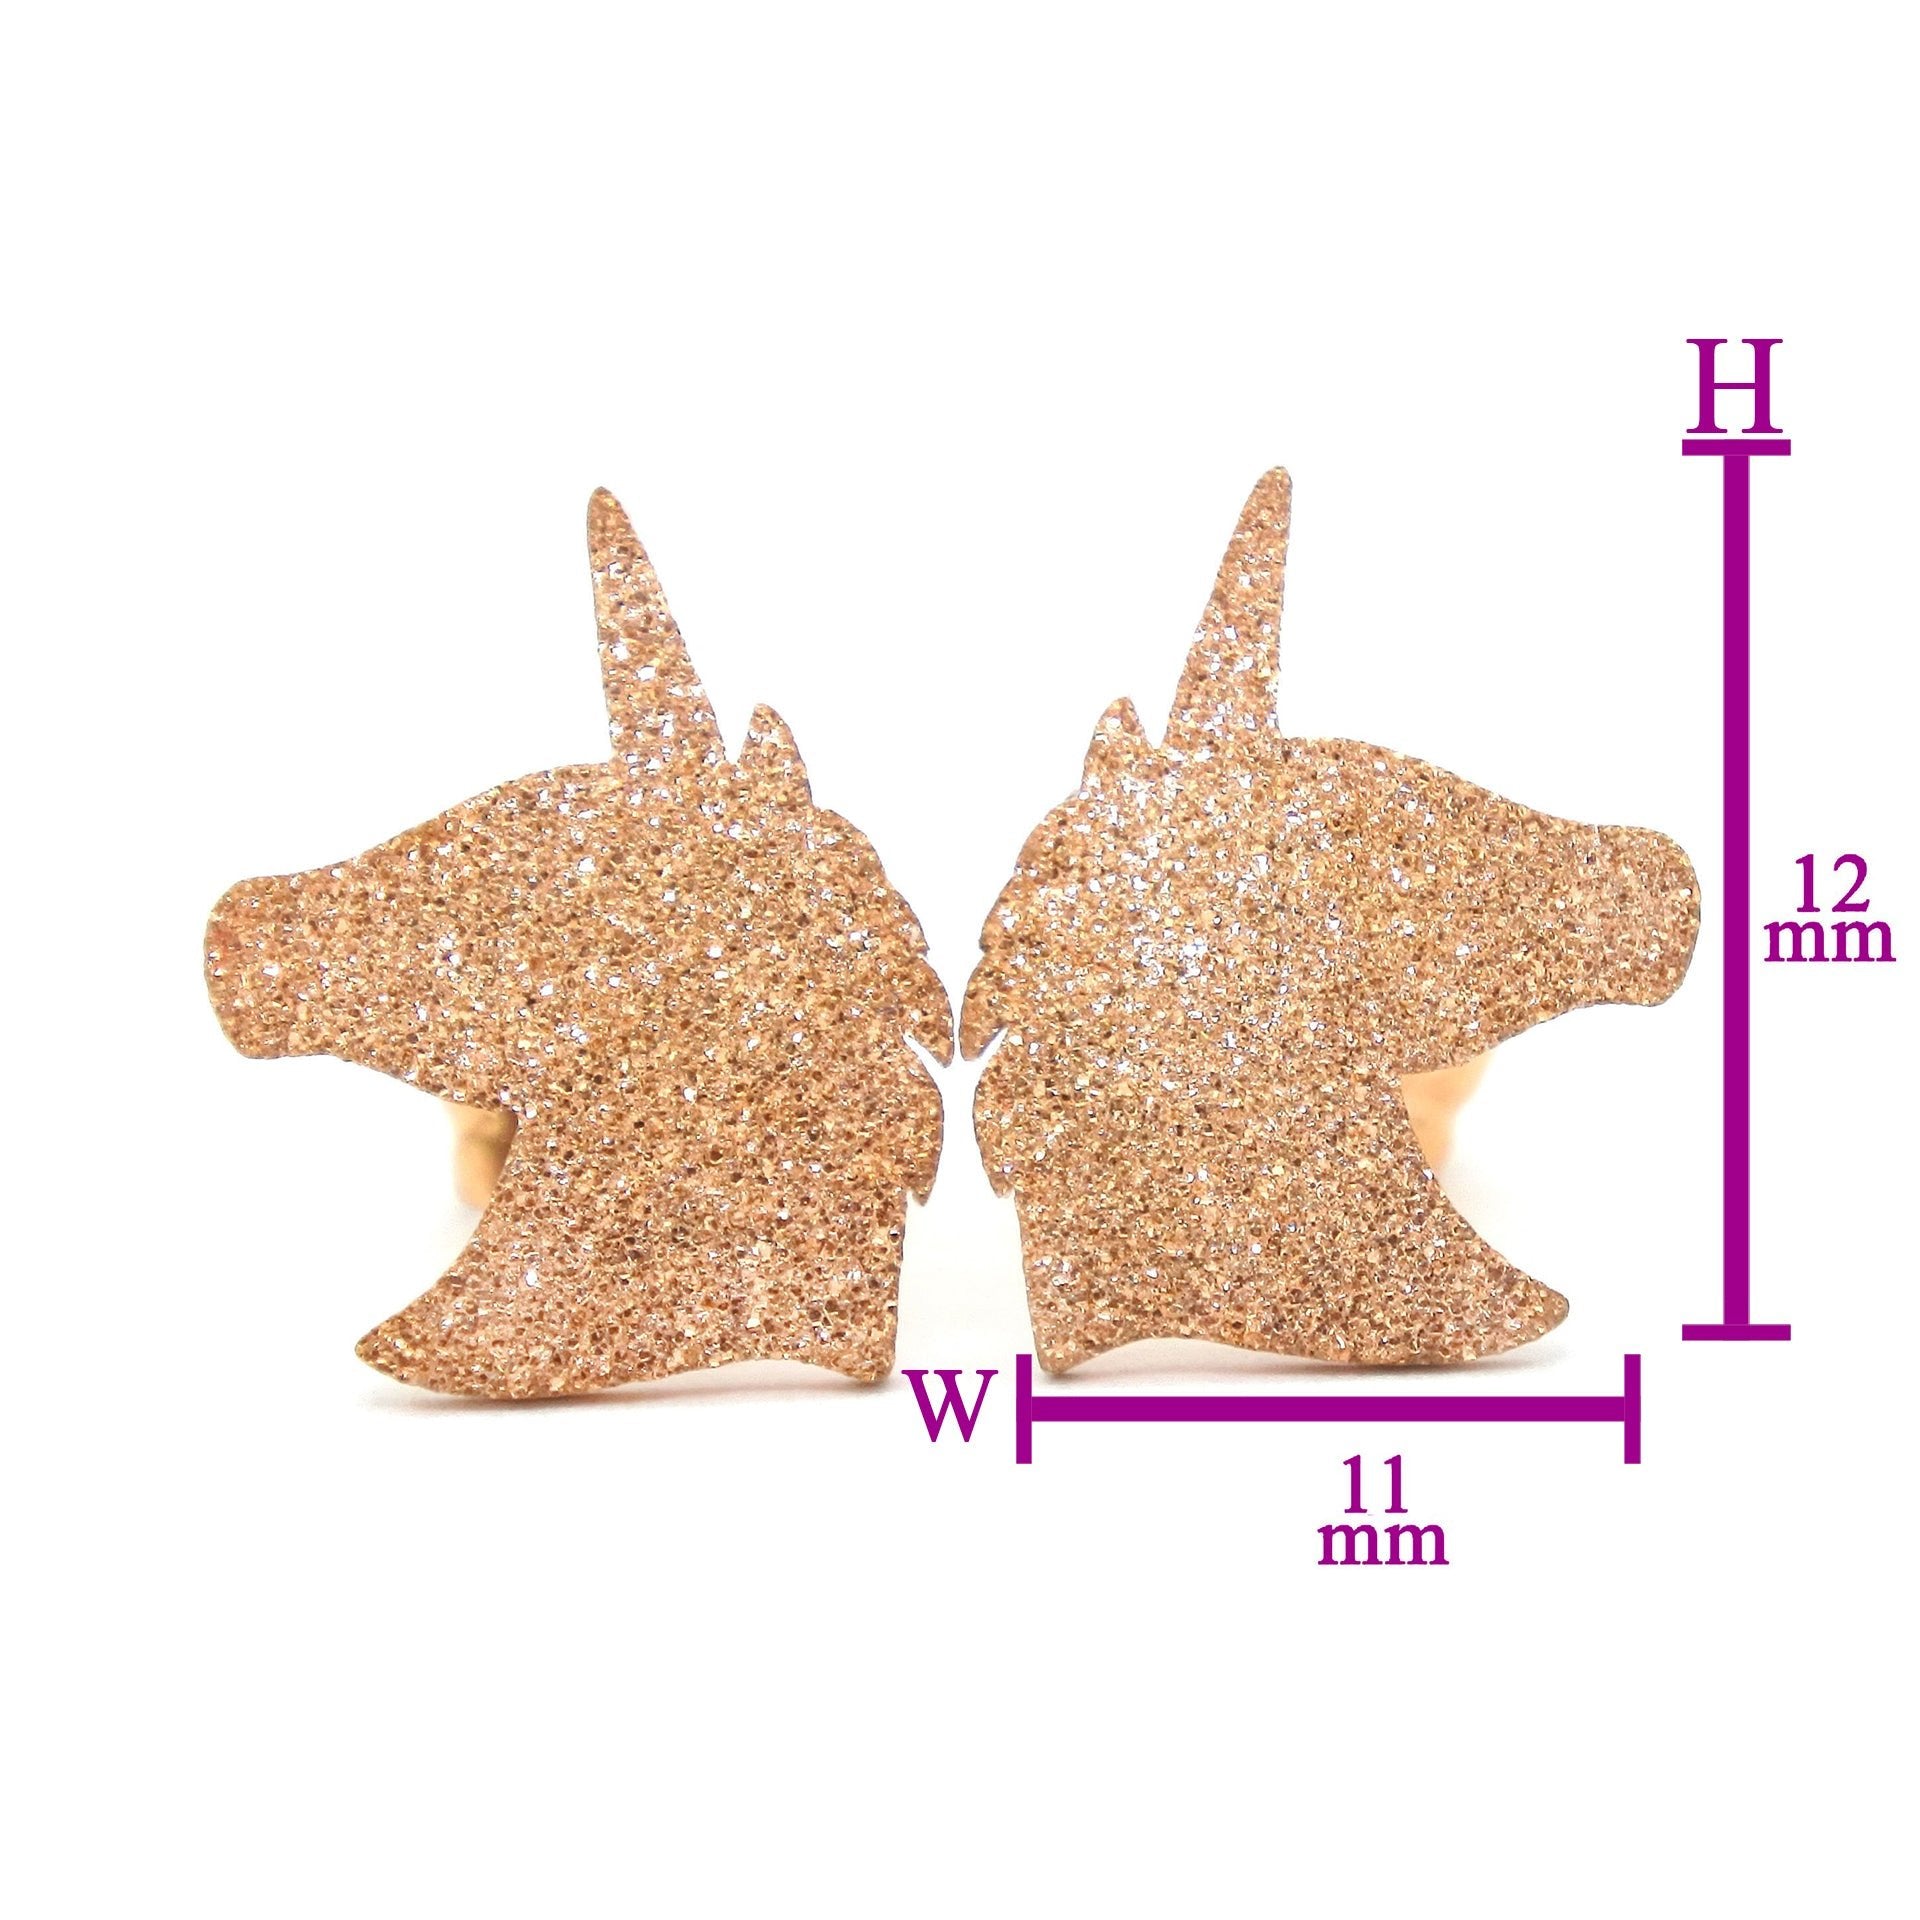 Sparkling Unicorn Earrings - Earrings by Belle Fever